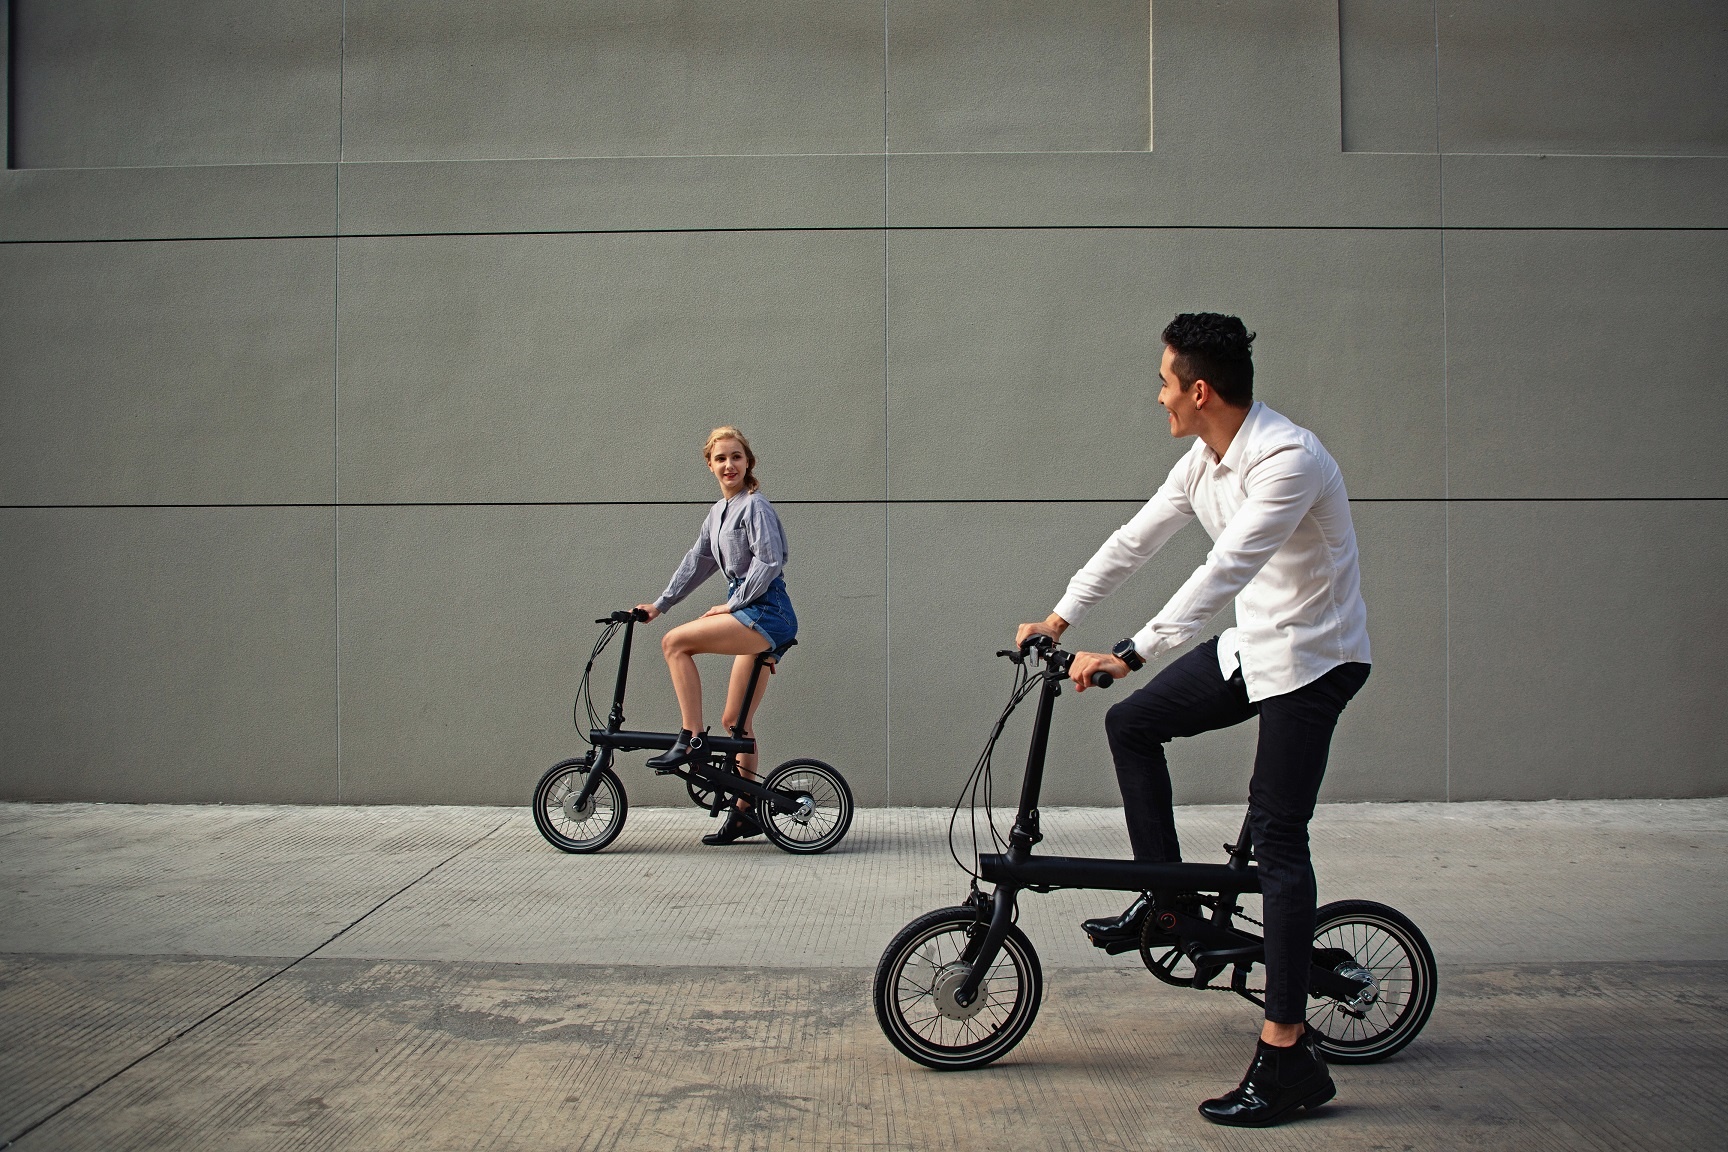 Xiaomi Mi Qicycle Folding Bike - TechPunt